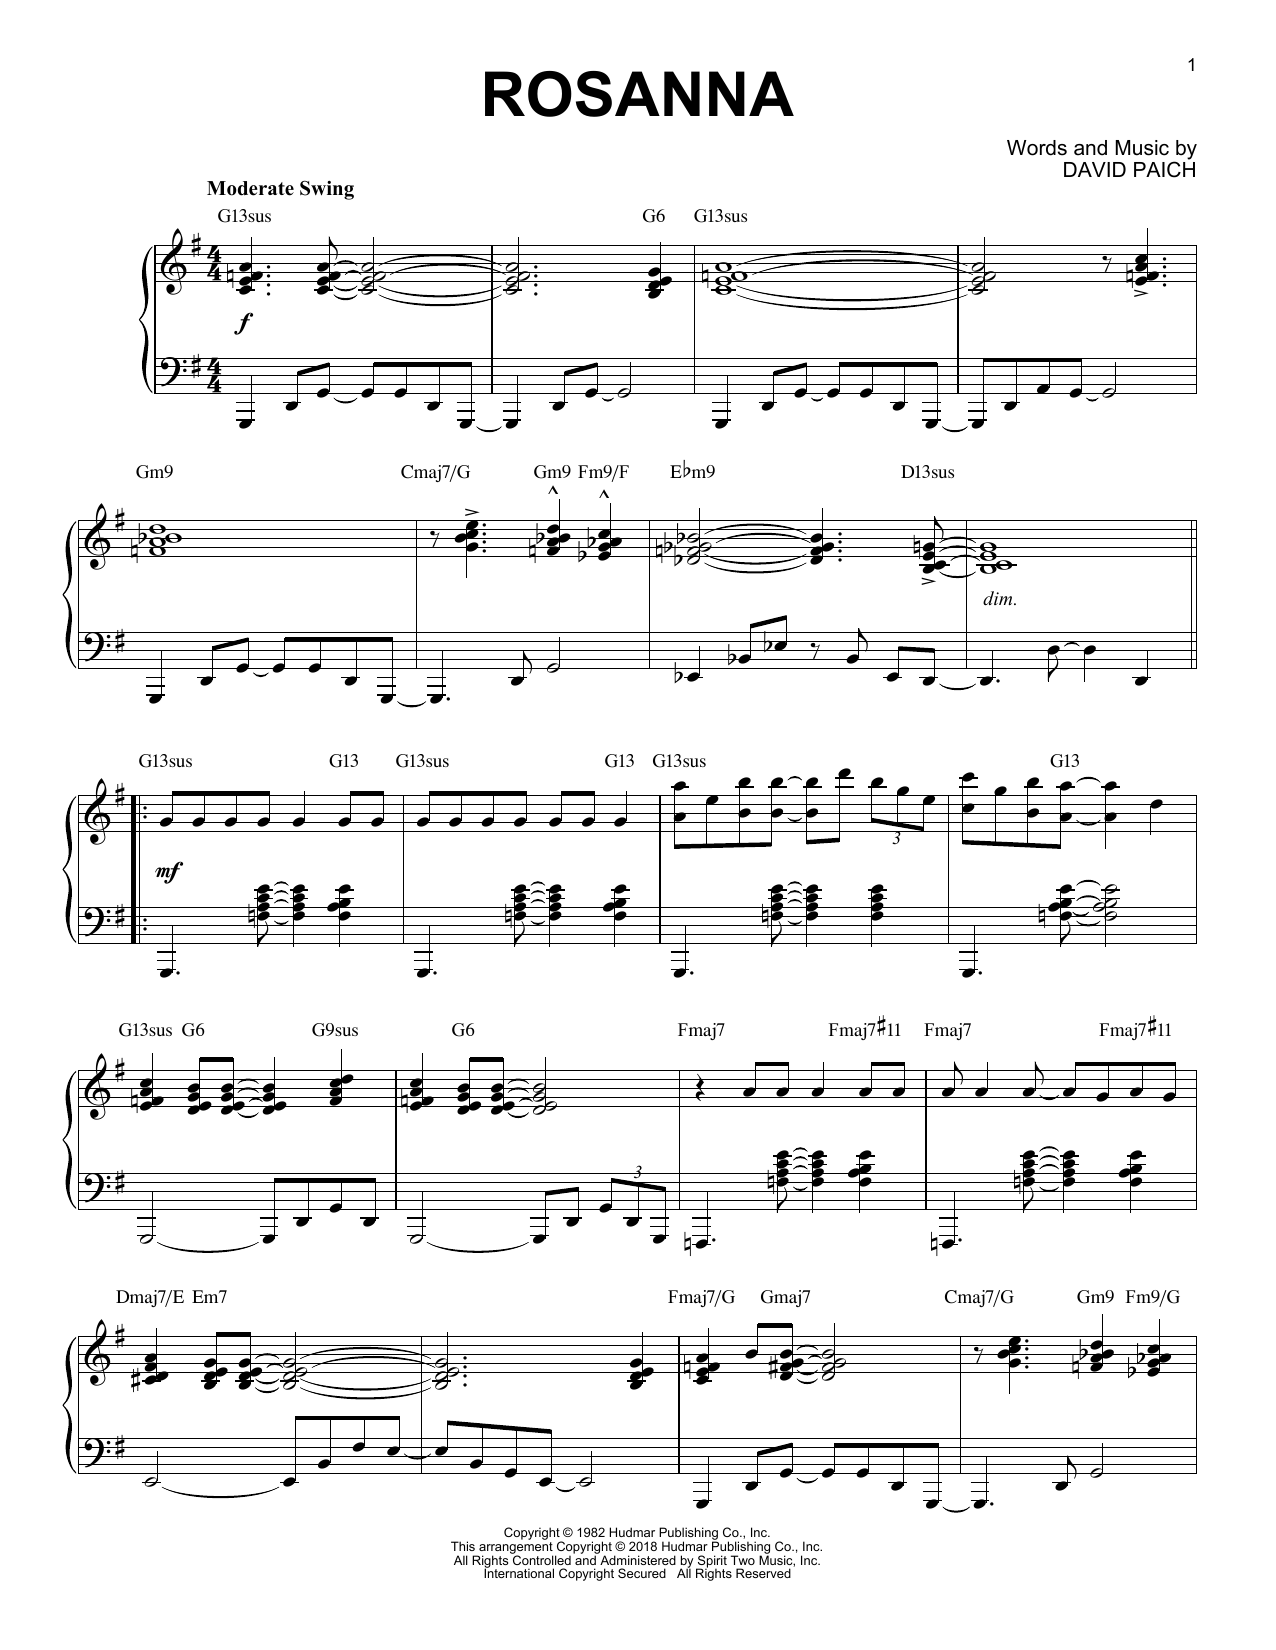 Toto Rosanna [Jazz version] Sheet Music Notes & Chords for Piano - Download or Print PDF